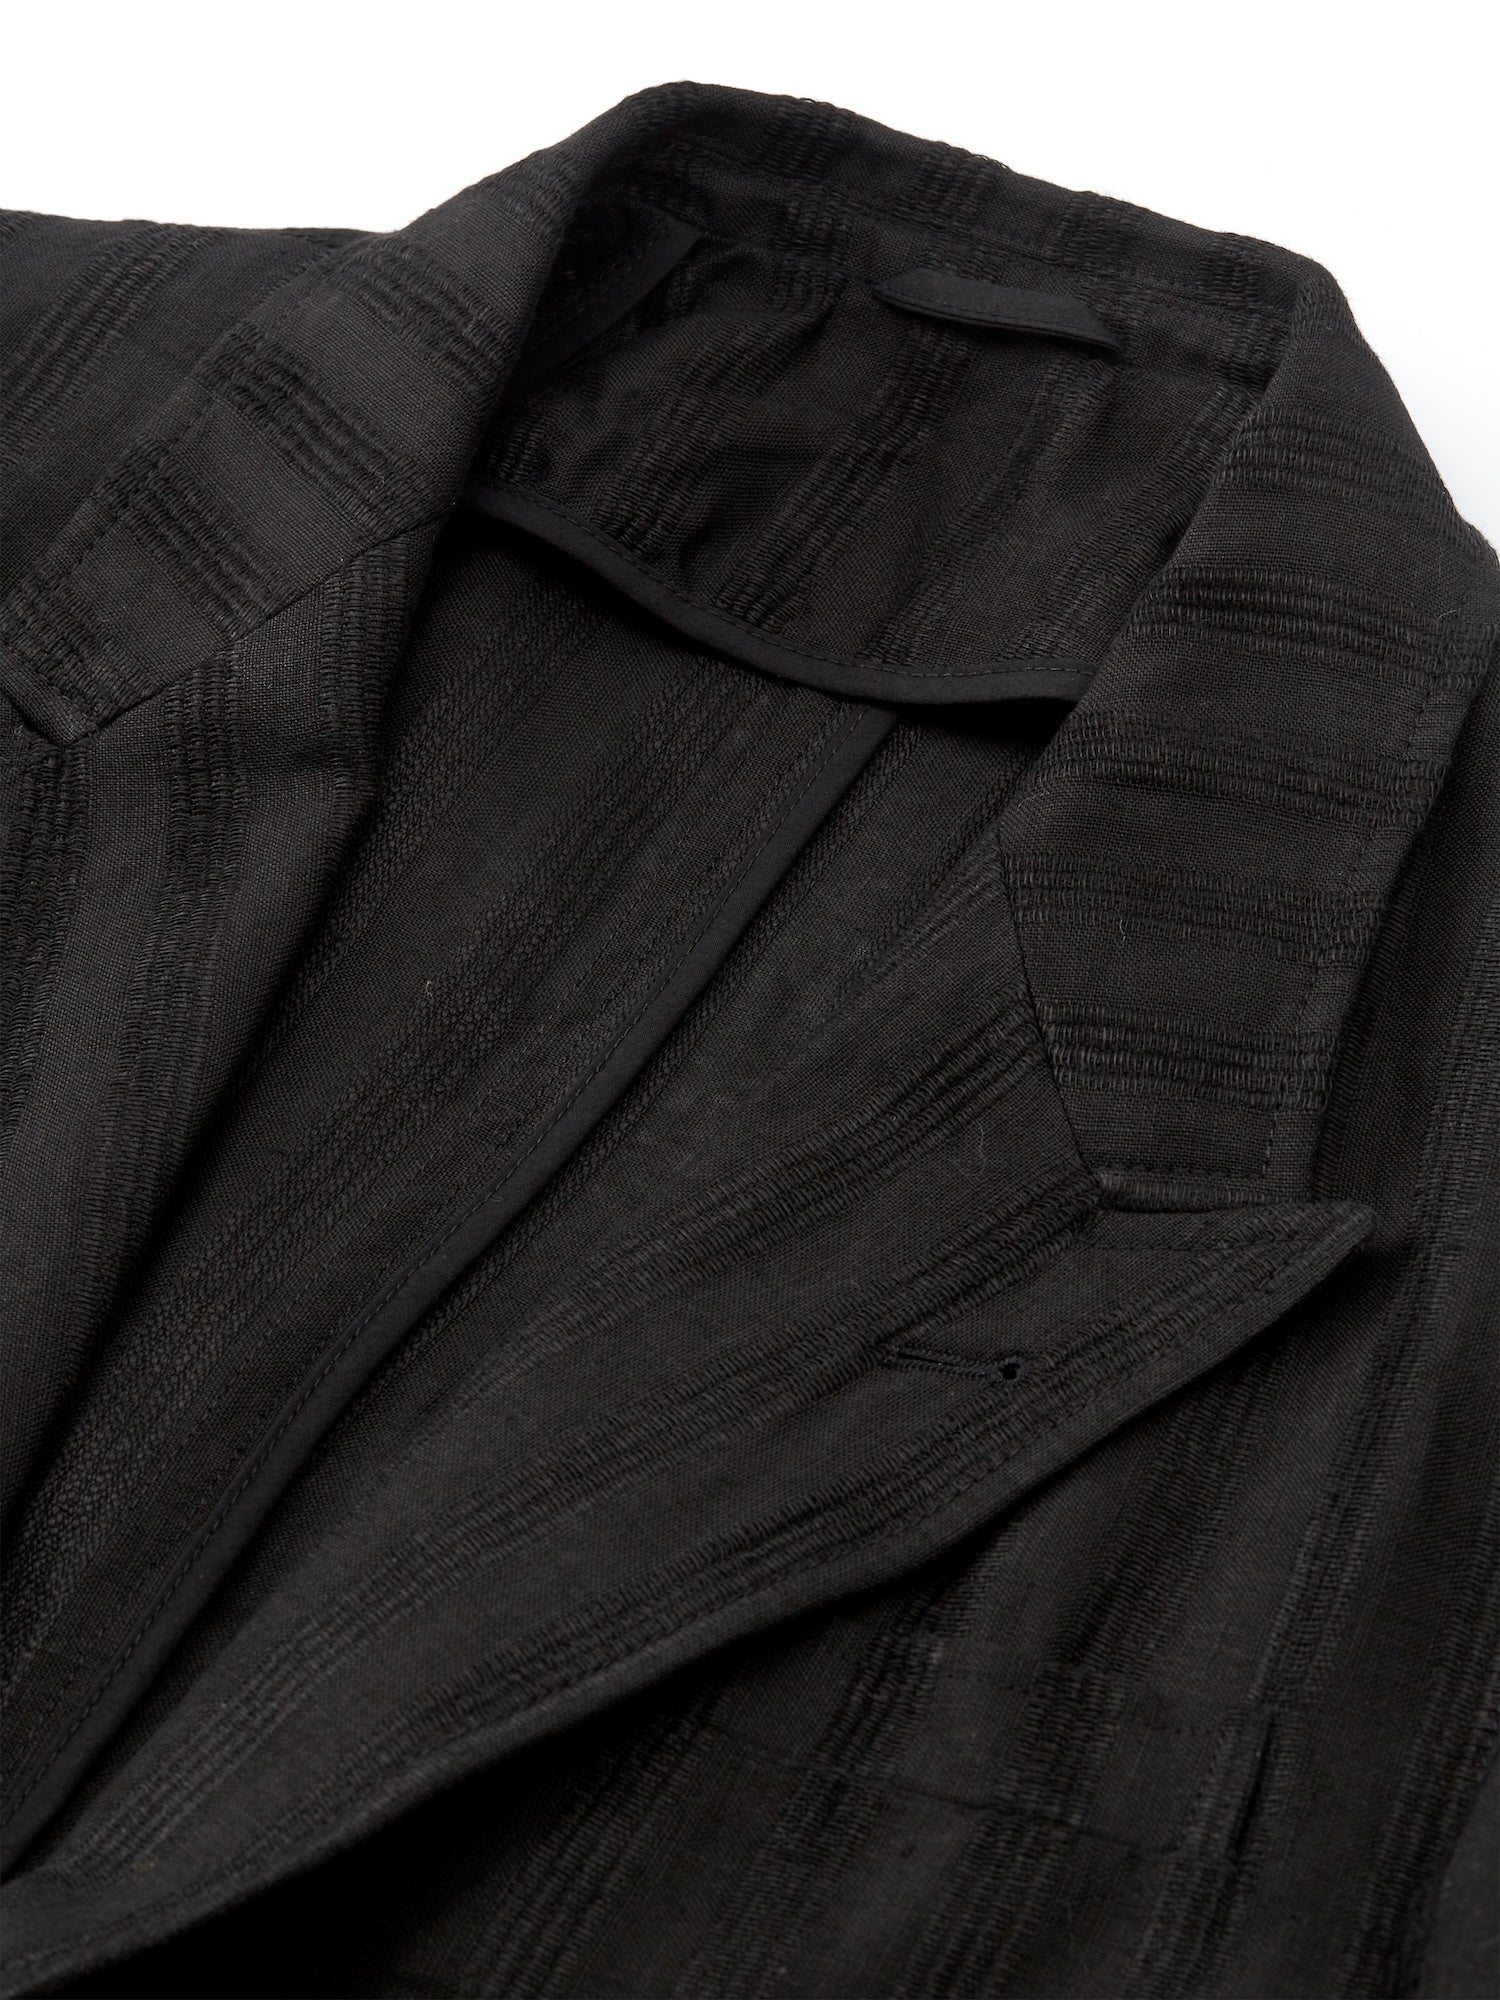 Black Arnold Wyndhams Suit